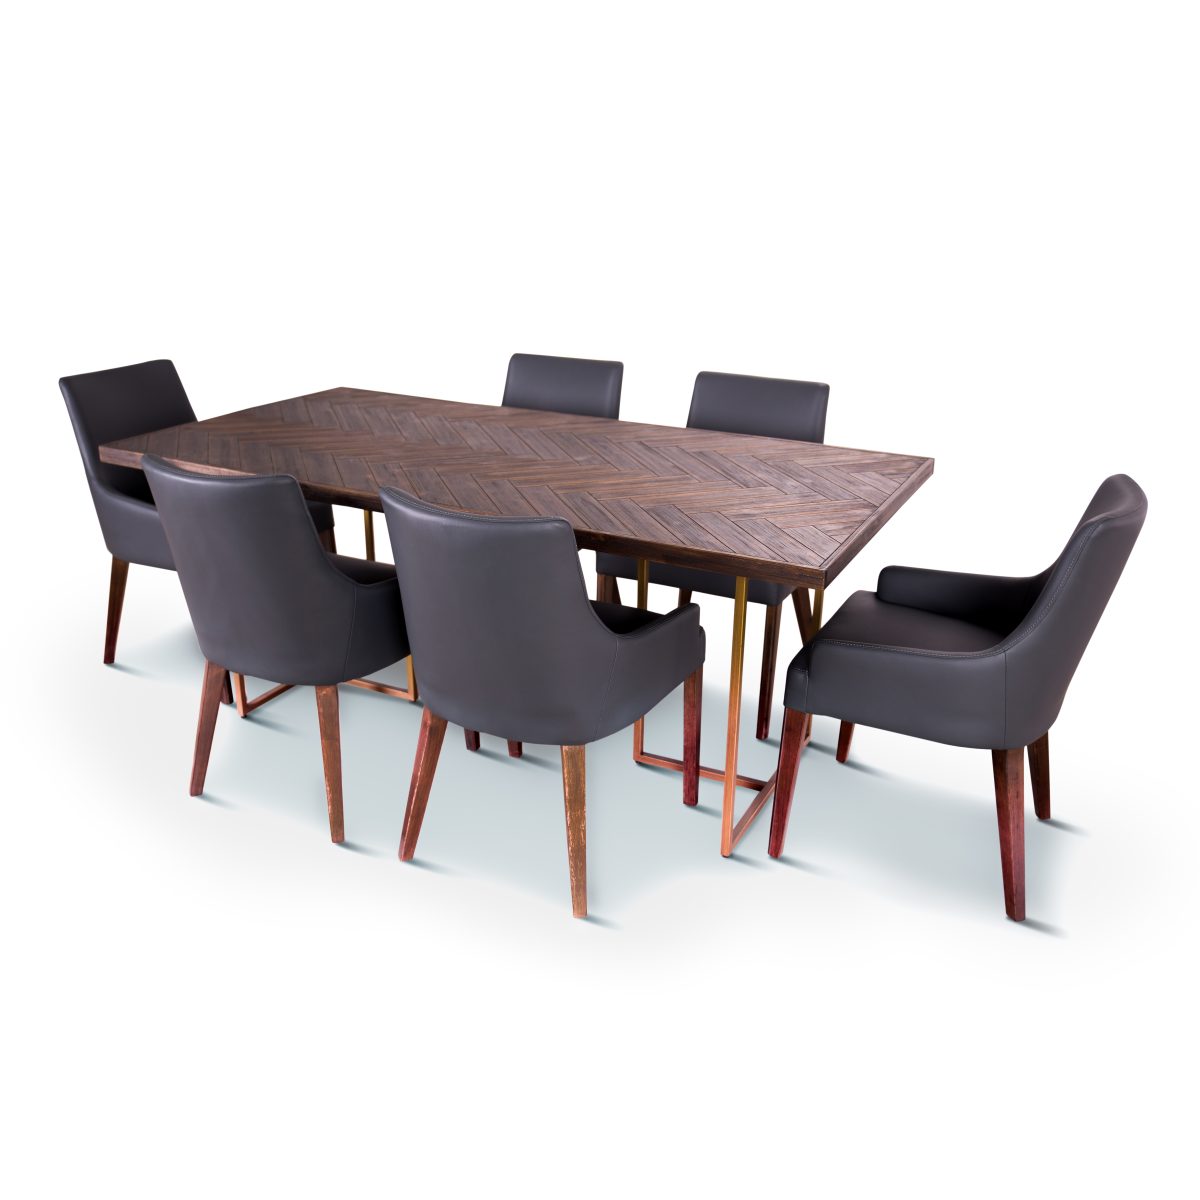 Tuberose Dining Table 180cm Solid Acacia Wood Home Herringbone Parquet – Brown